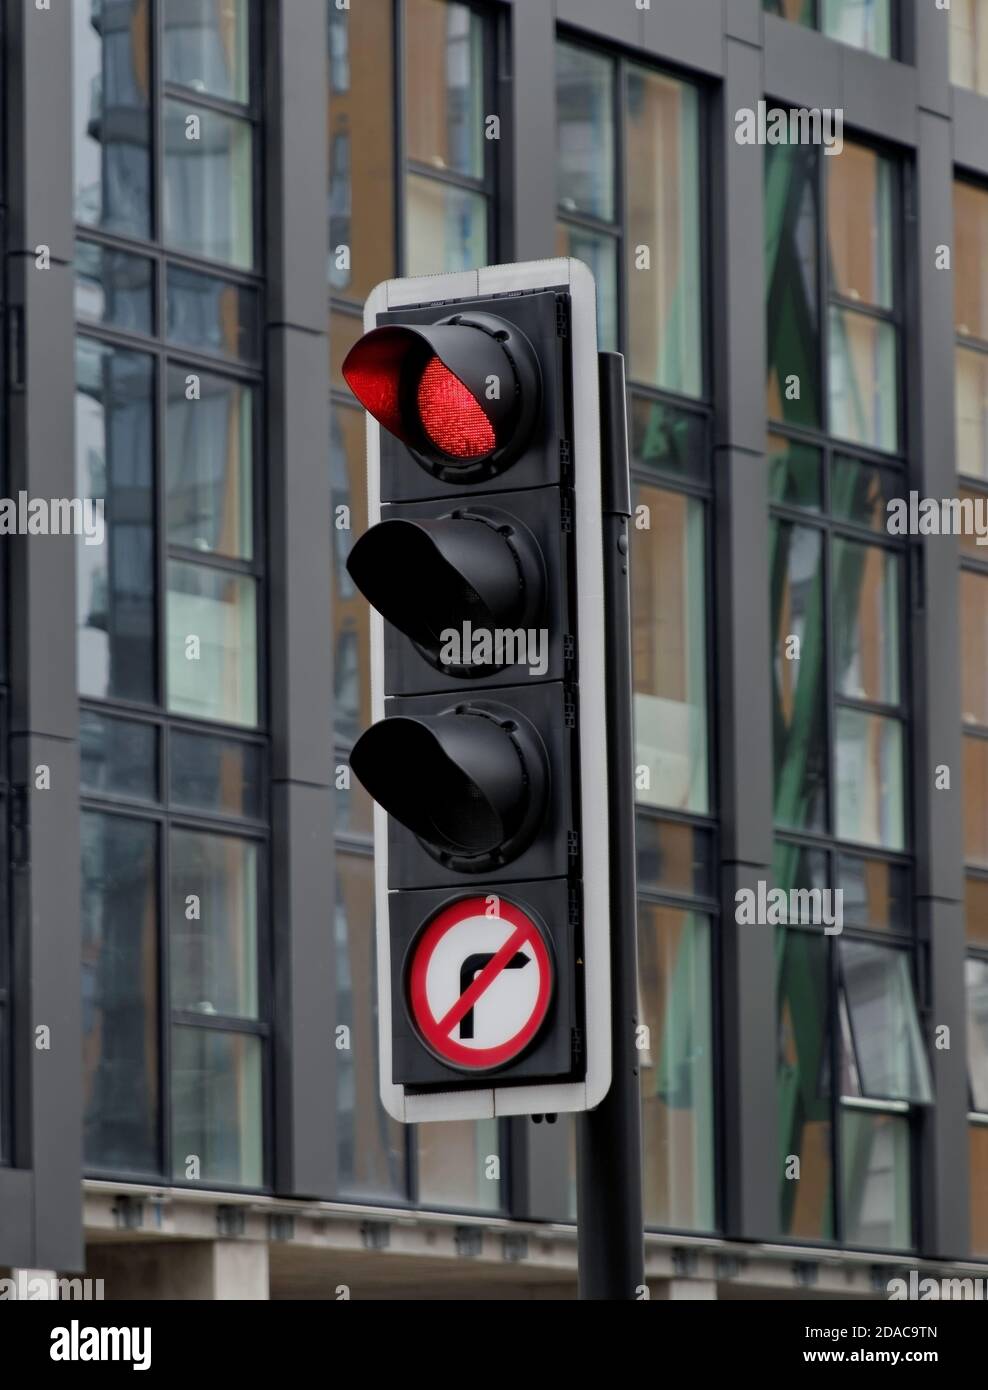 Traffic light on red. Stock Photo